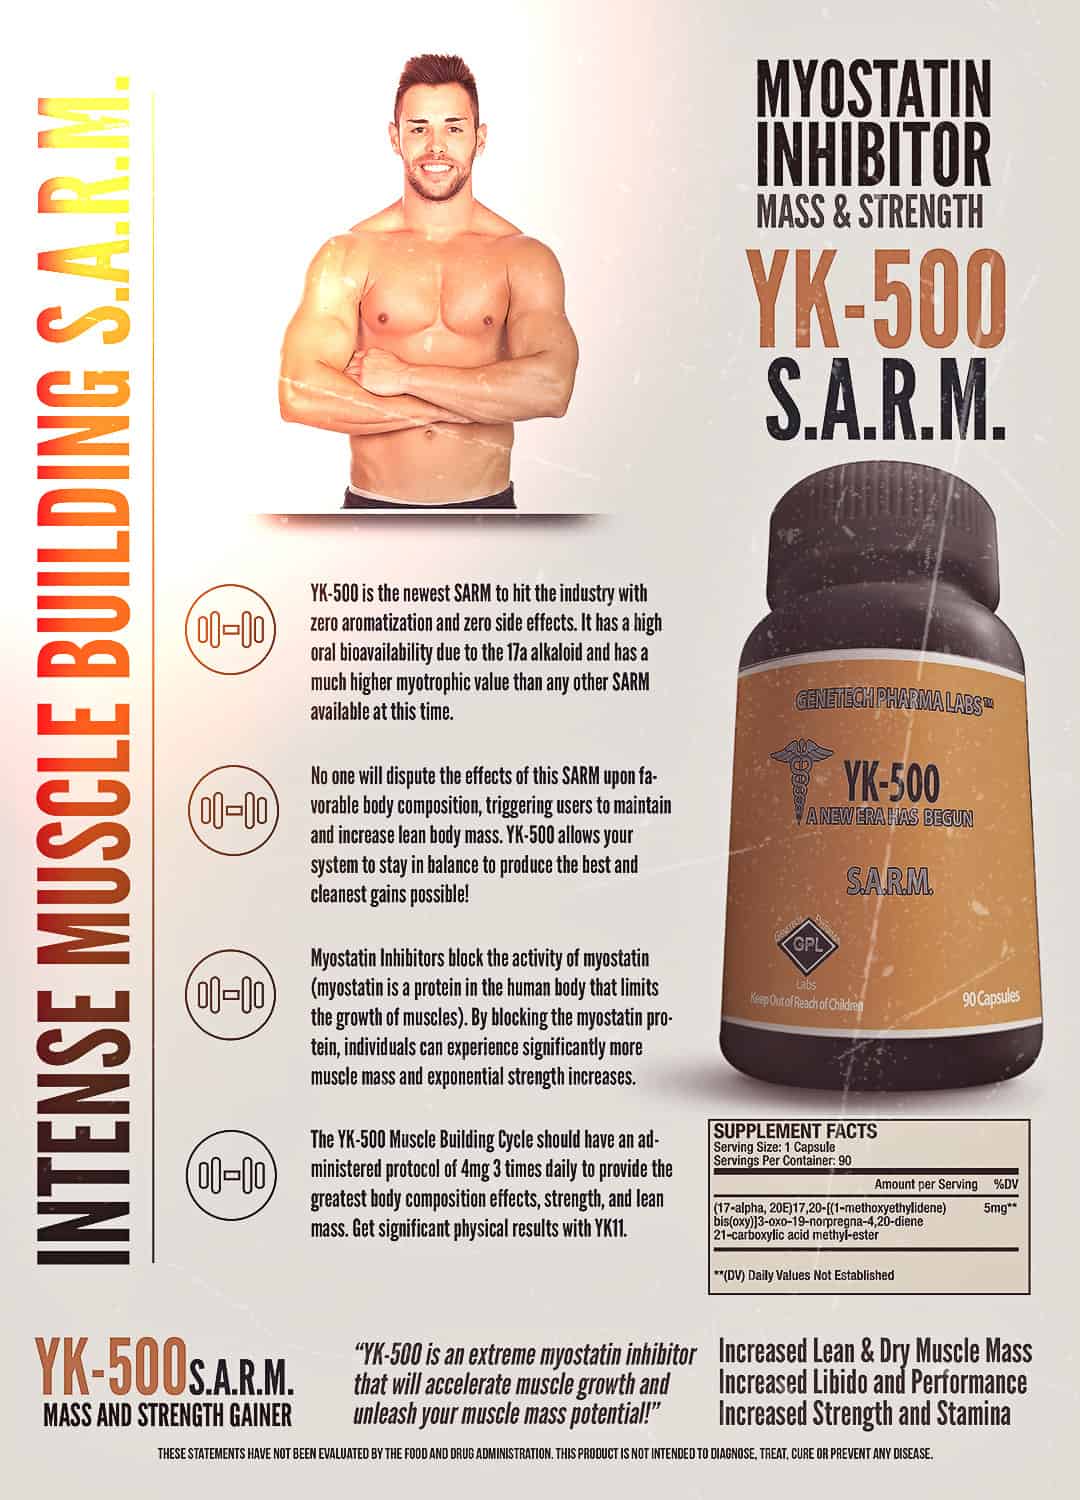 YK-500 SARM by GeneTech Pharma Labs